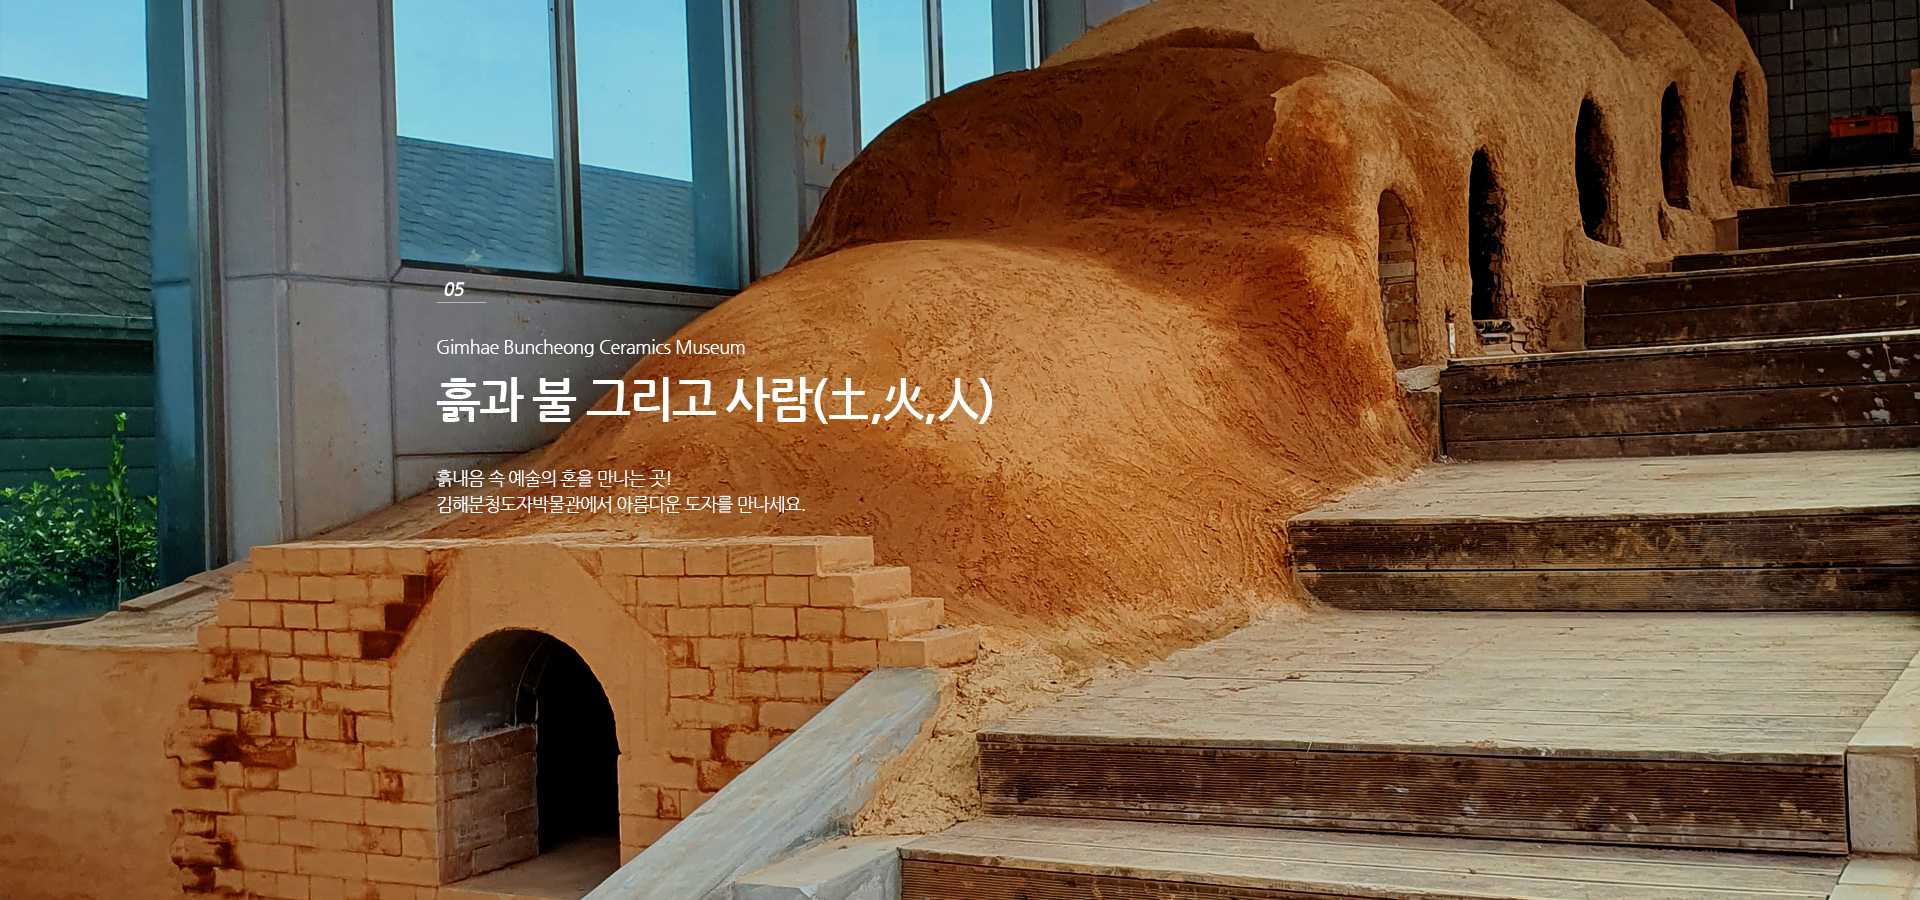 05. Gimhae Buncheong Ceramics Museum. 흙과 불 그리고 사람(土,火,人). 흙내음 속 예술의 혼을 만나는 곳! 김해분청도자박물관에서 아름다운 도자를 만나세요.